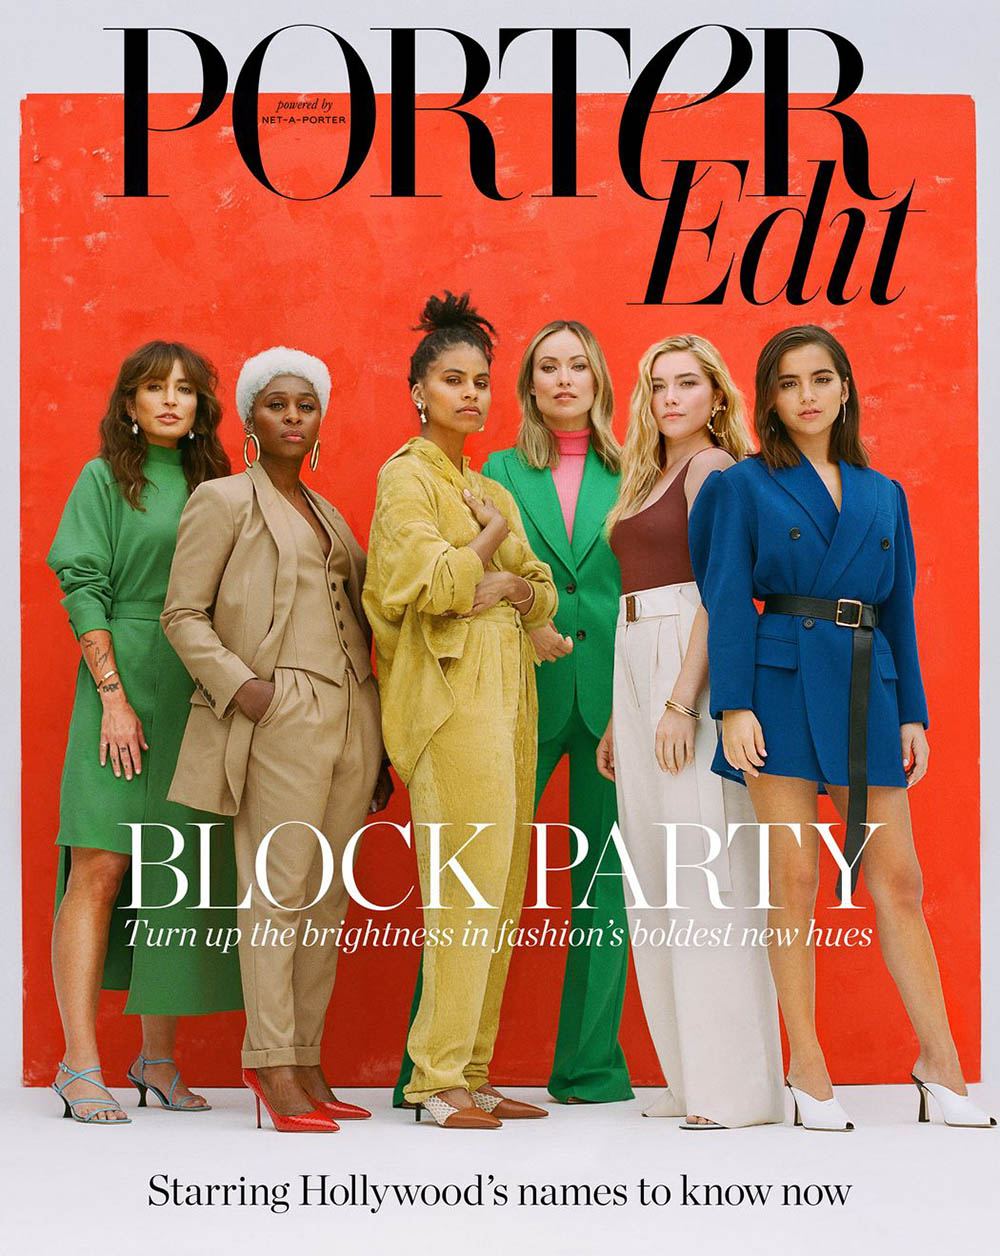 Porter Edit June 14th, 2019 cover by Camila Falquez